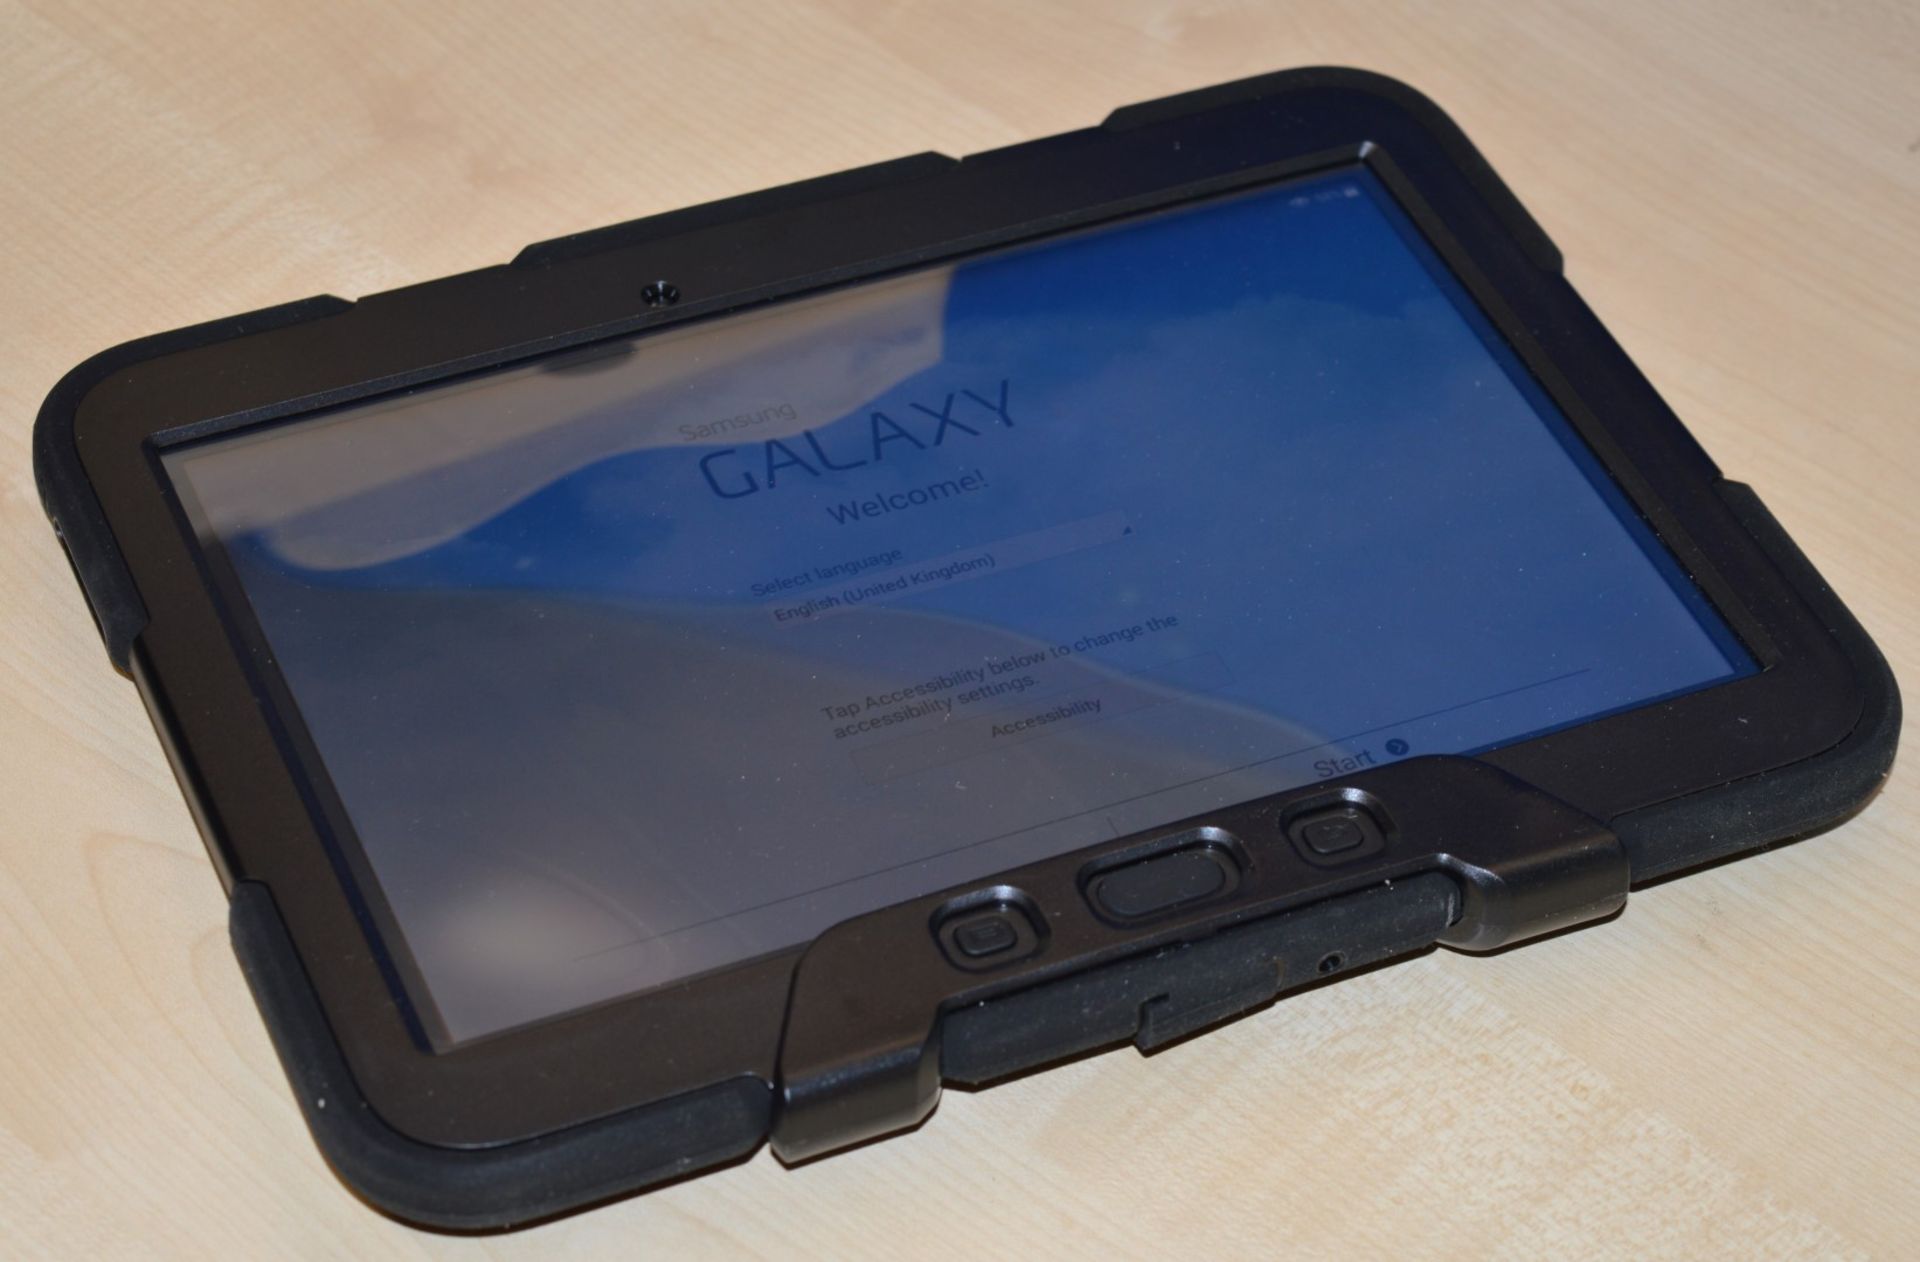 1 x Samsung Galaxy Tab 4 - Model SM-T530 - Features 10.1 Inch LCD Screen, 1.2ghz 1.5gb Ram, 16gb Rom - Image 3 of 3